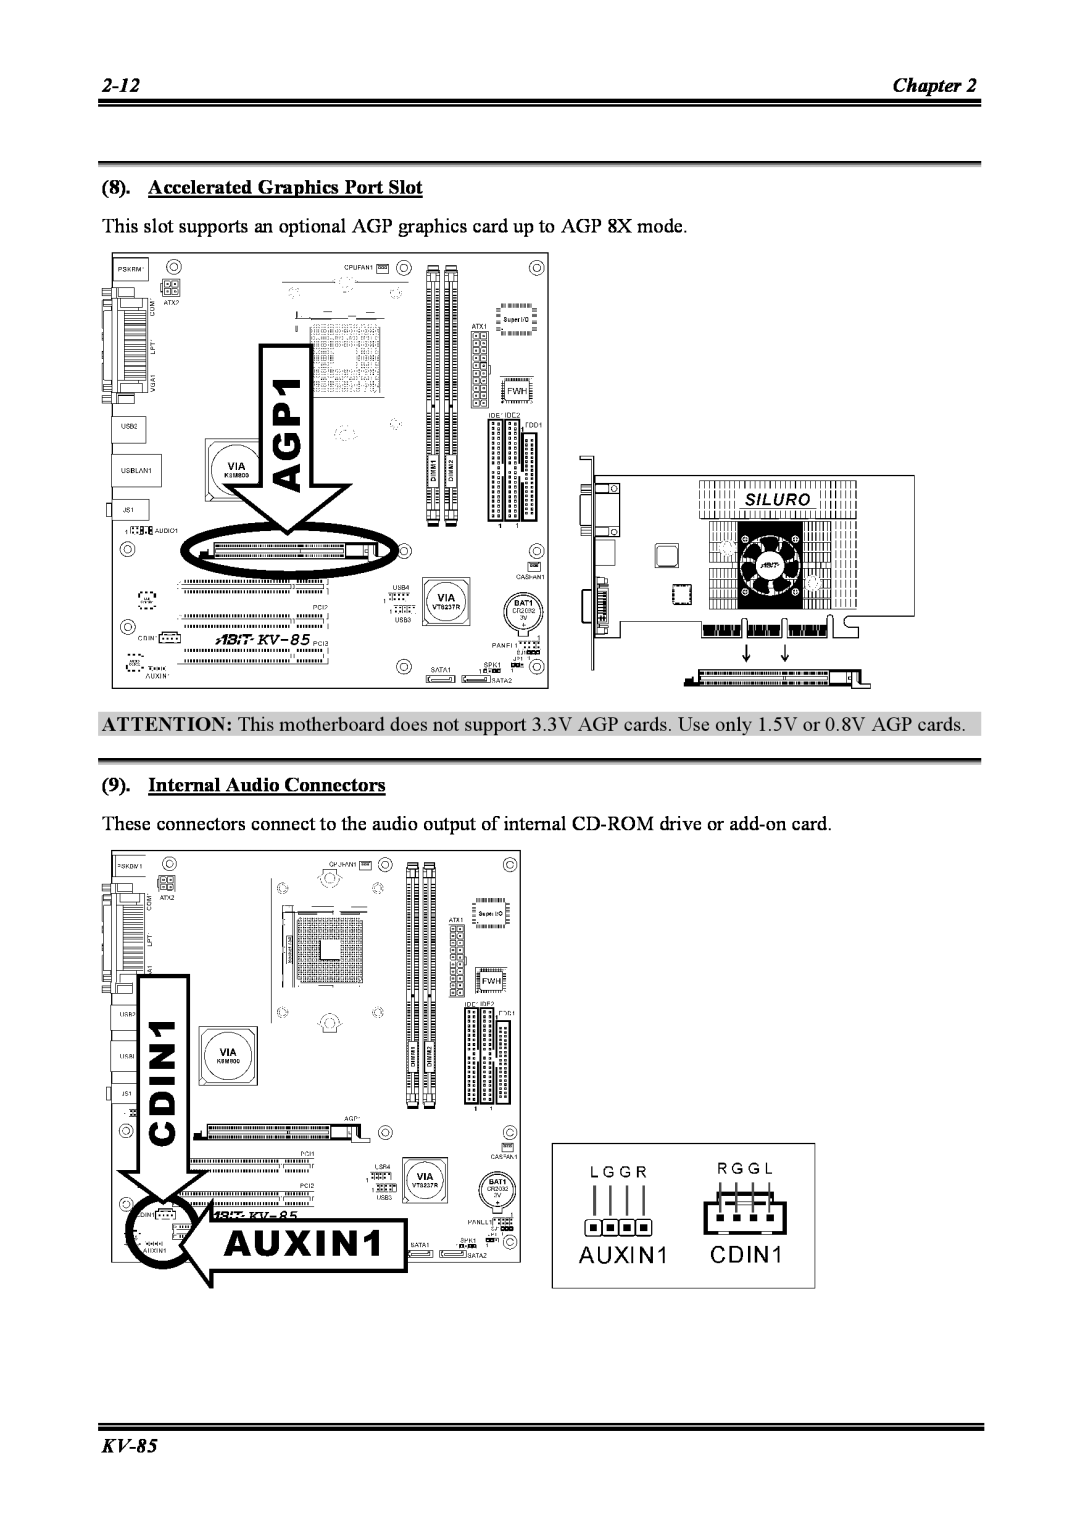 Abit KV-85 user manual Accelerated Graphics Port Slot, Internal Audio Connectors 